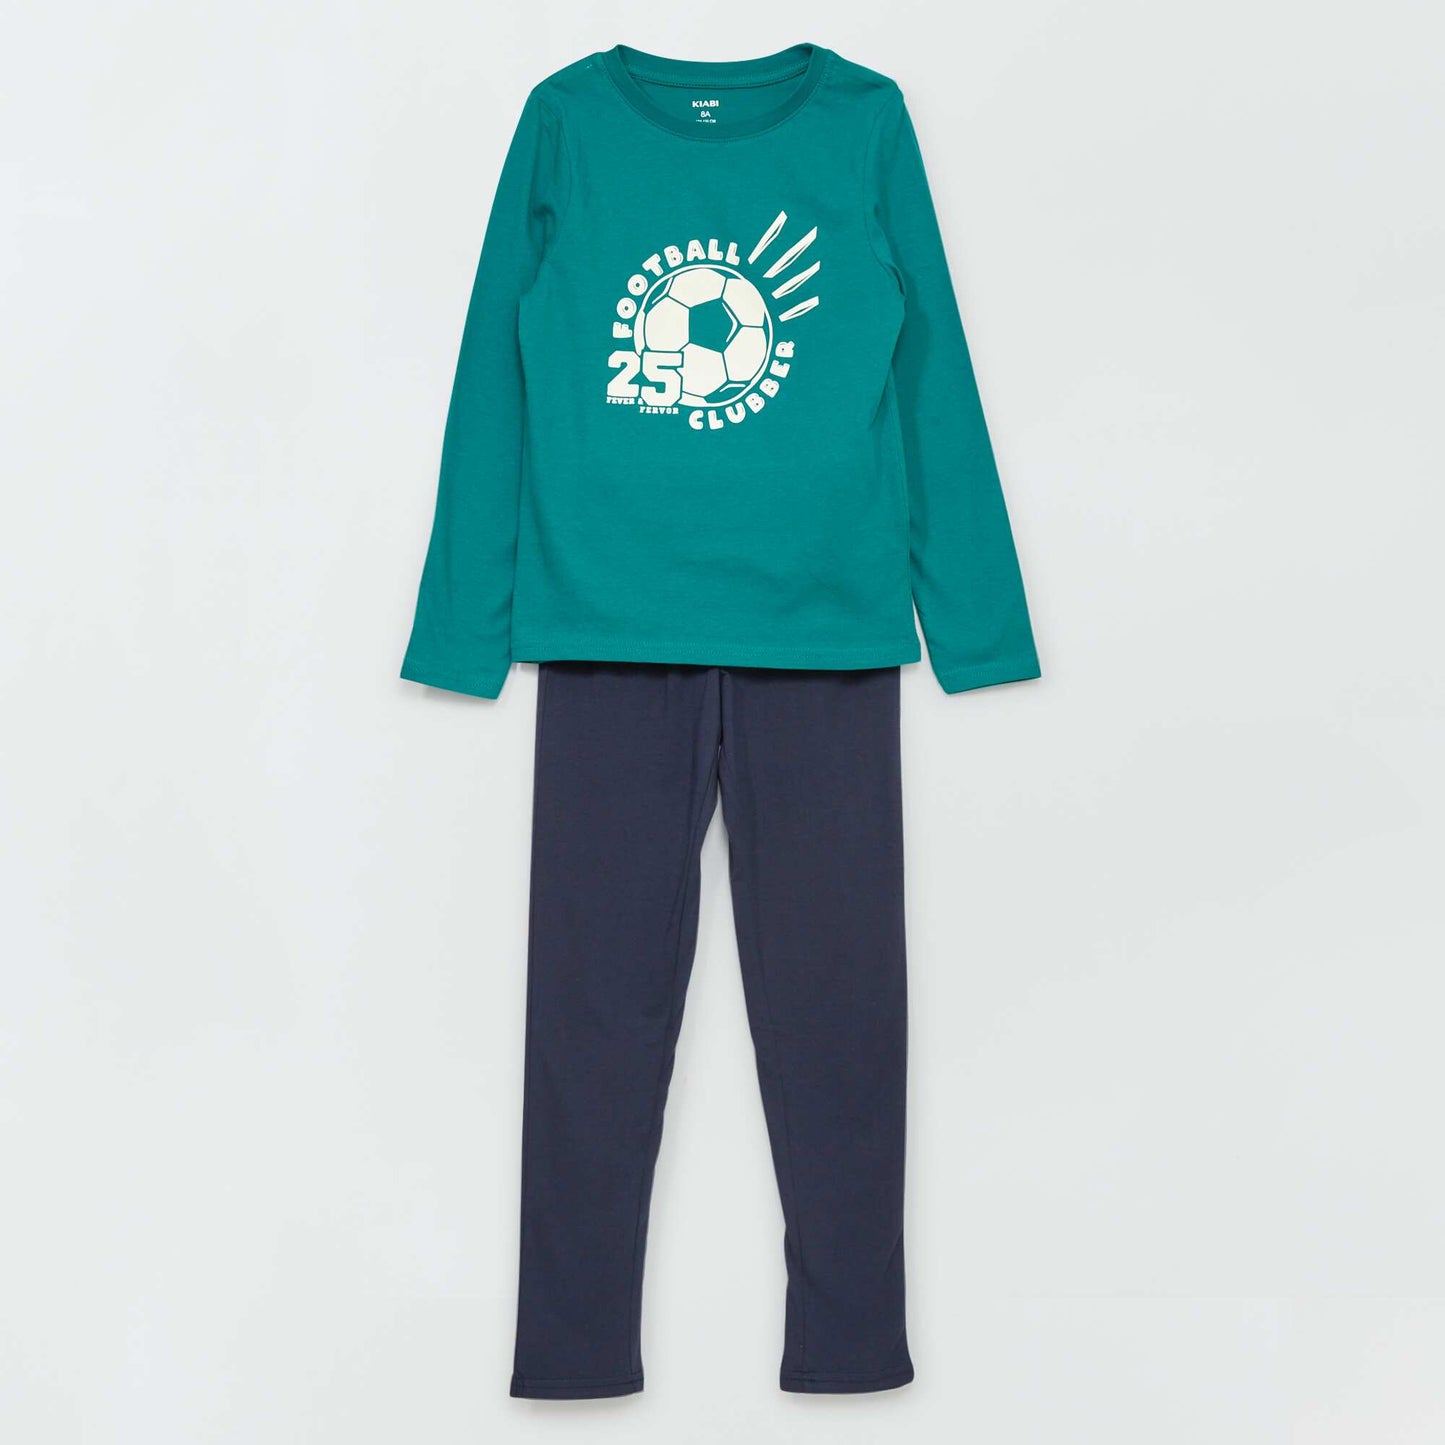 Ensemble pyjama t-shirt + pantalon - 2 pièces Vert/bleu